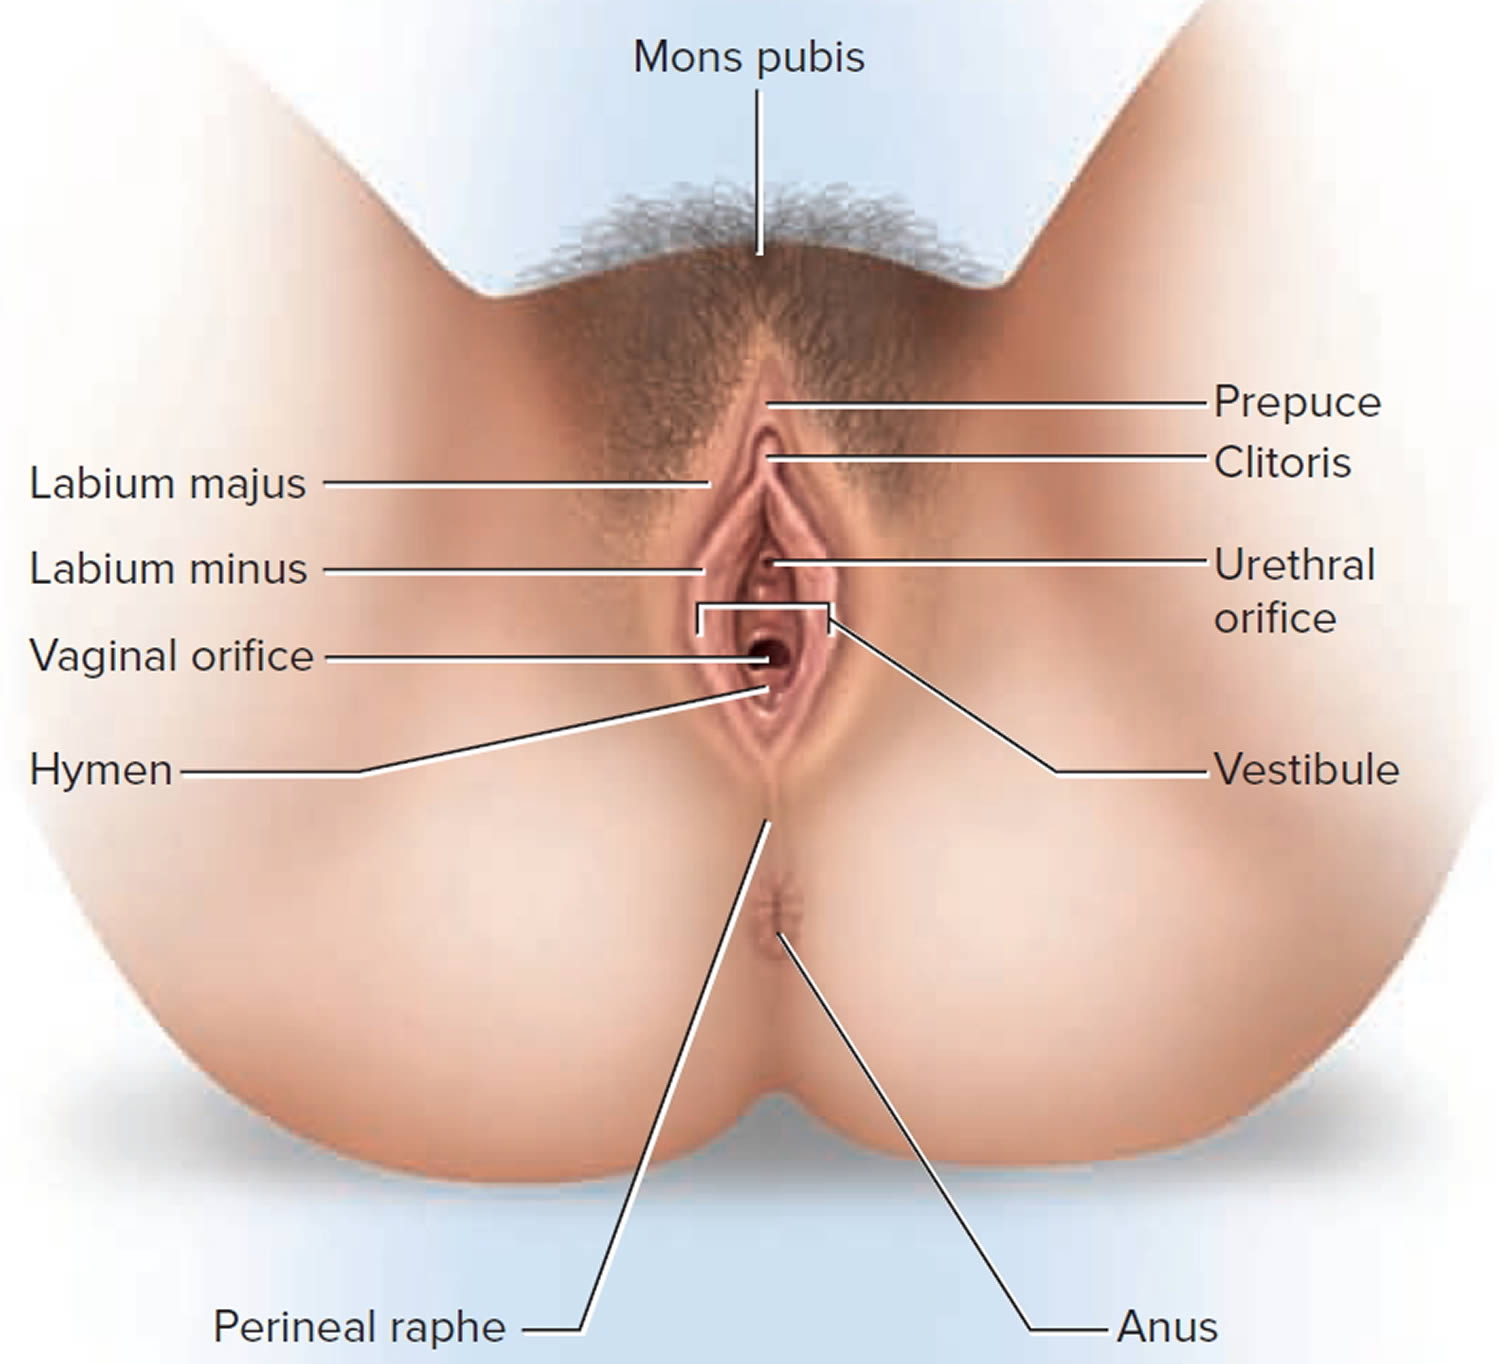 Noed vagina femel